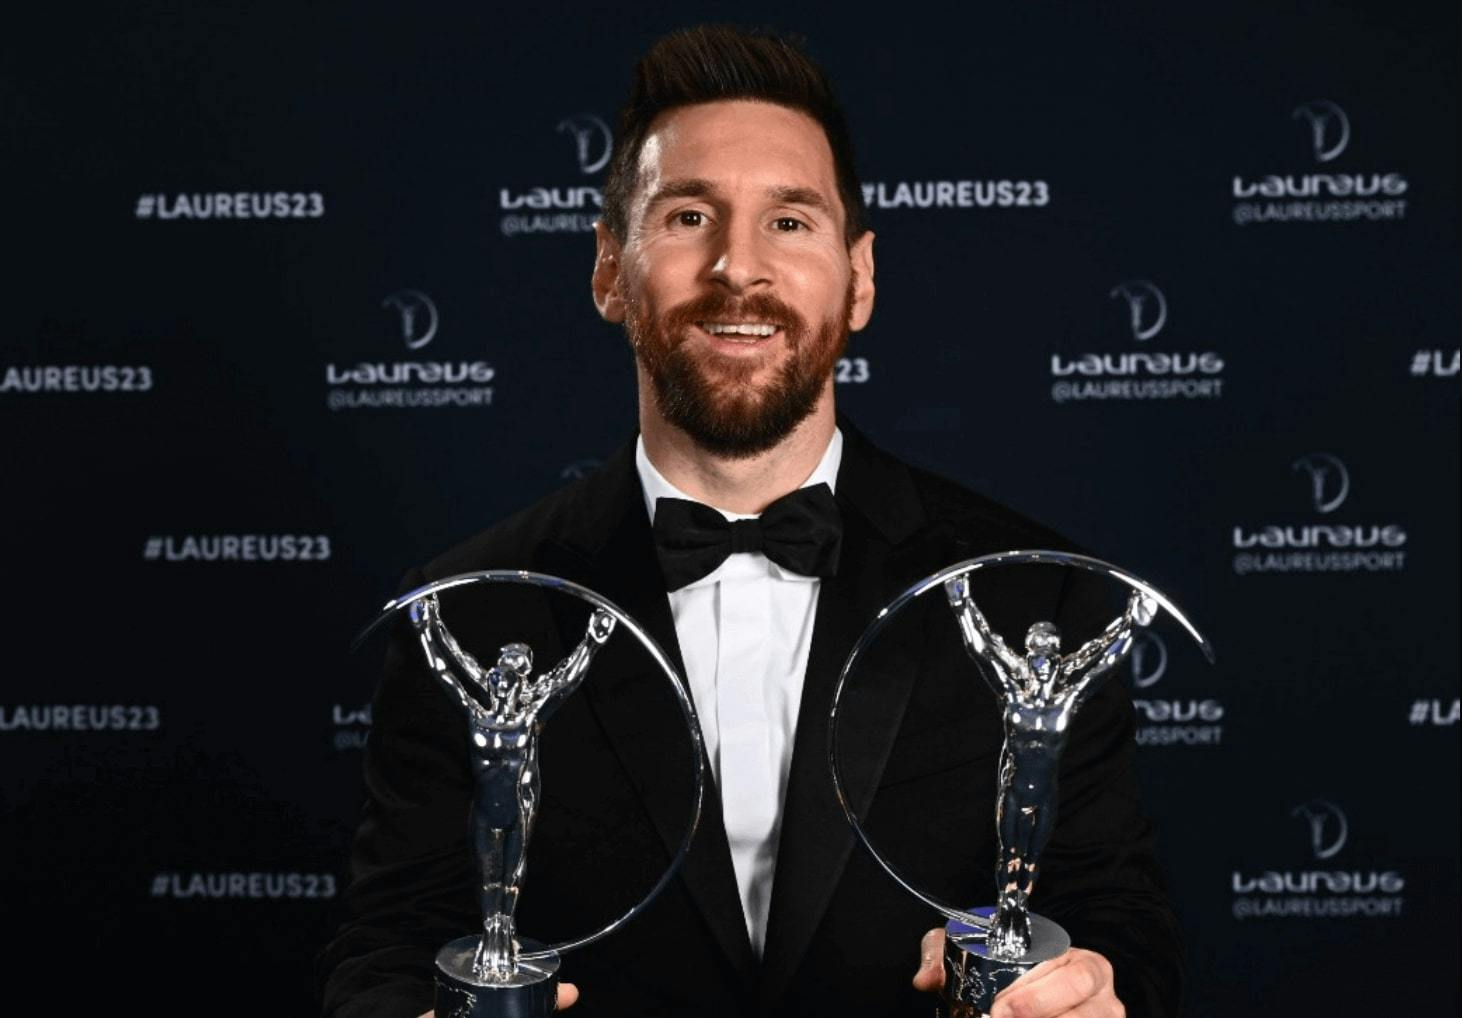 Lionel Messi Creates History at the 2023 Laureus Awards